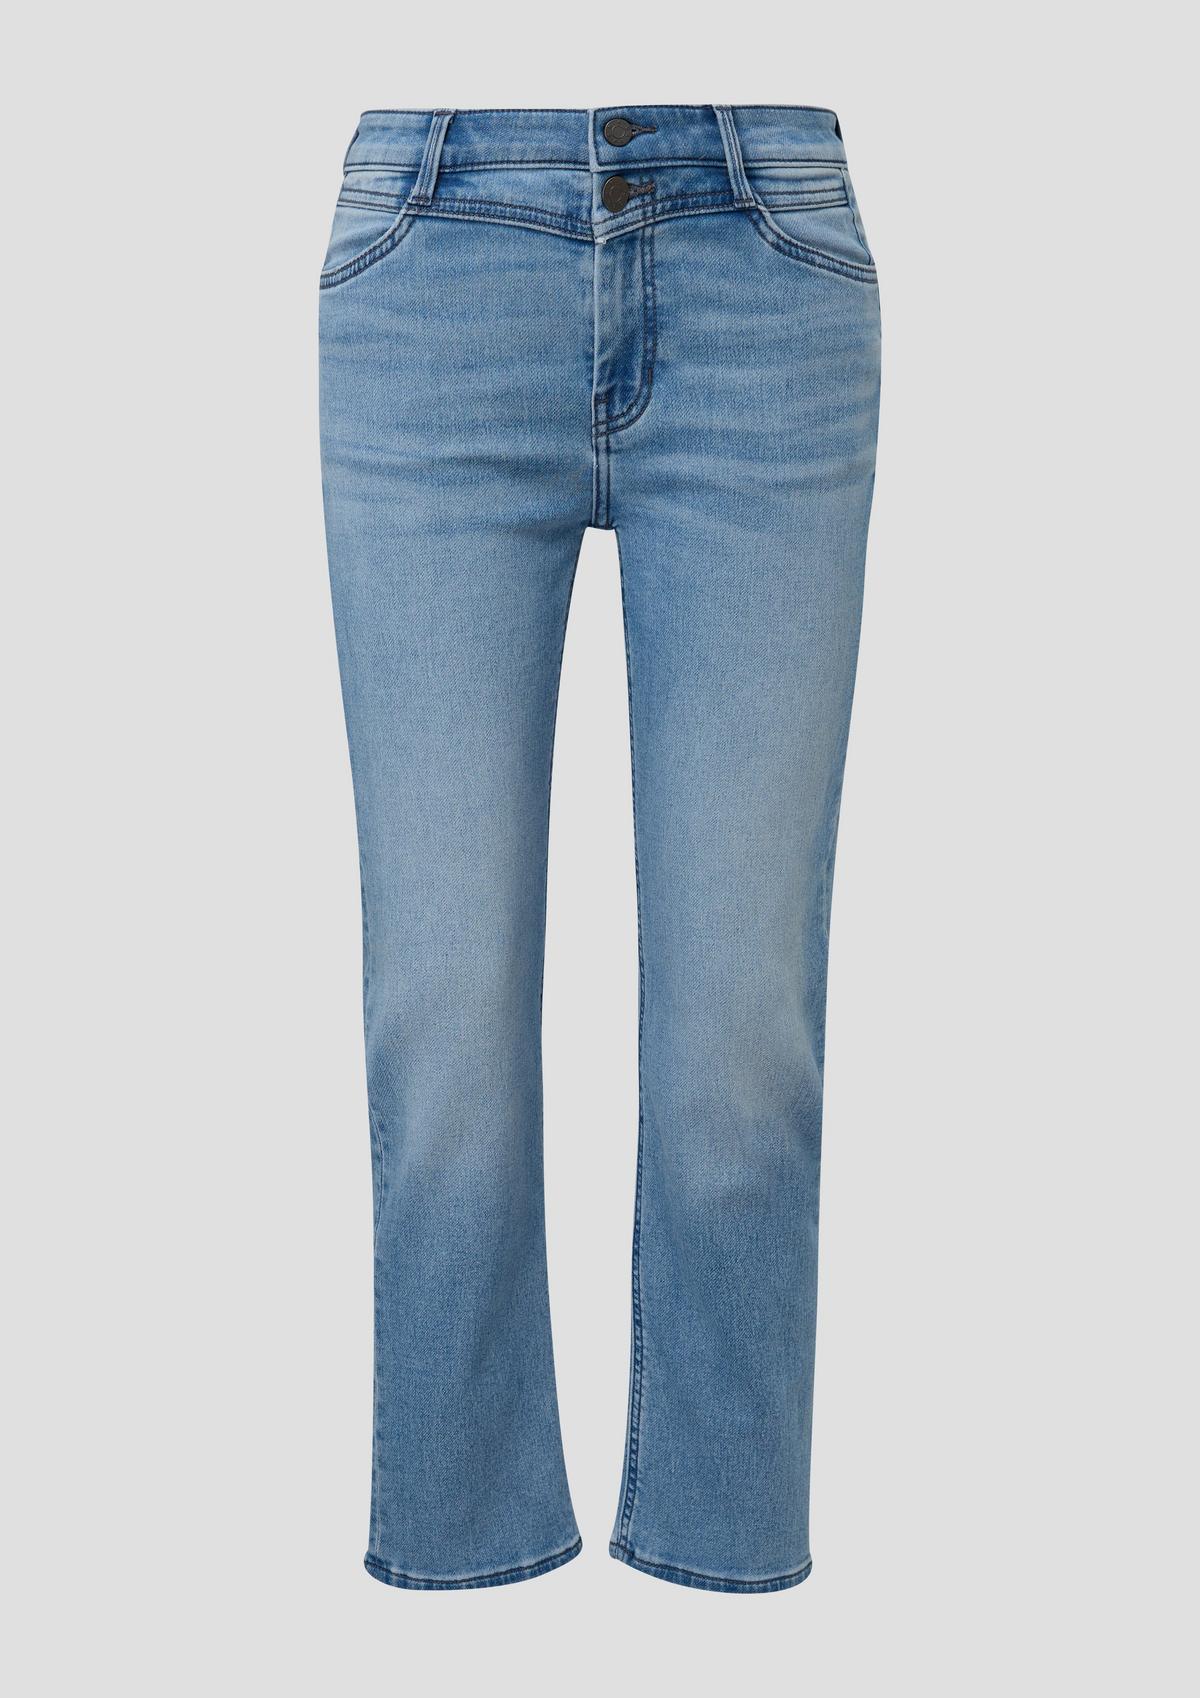 s.Oliver Karolin cropped jeans / regular fit / mid rise / straight leg / saddle yoke